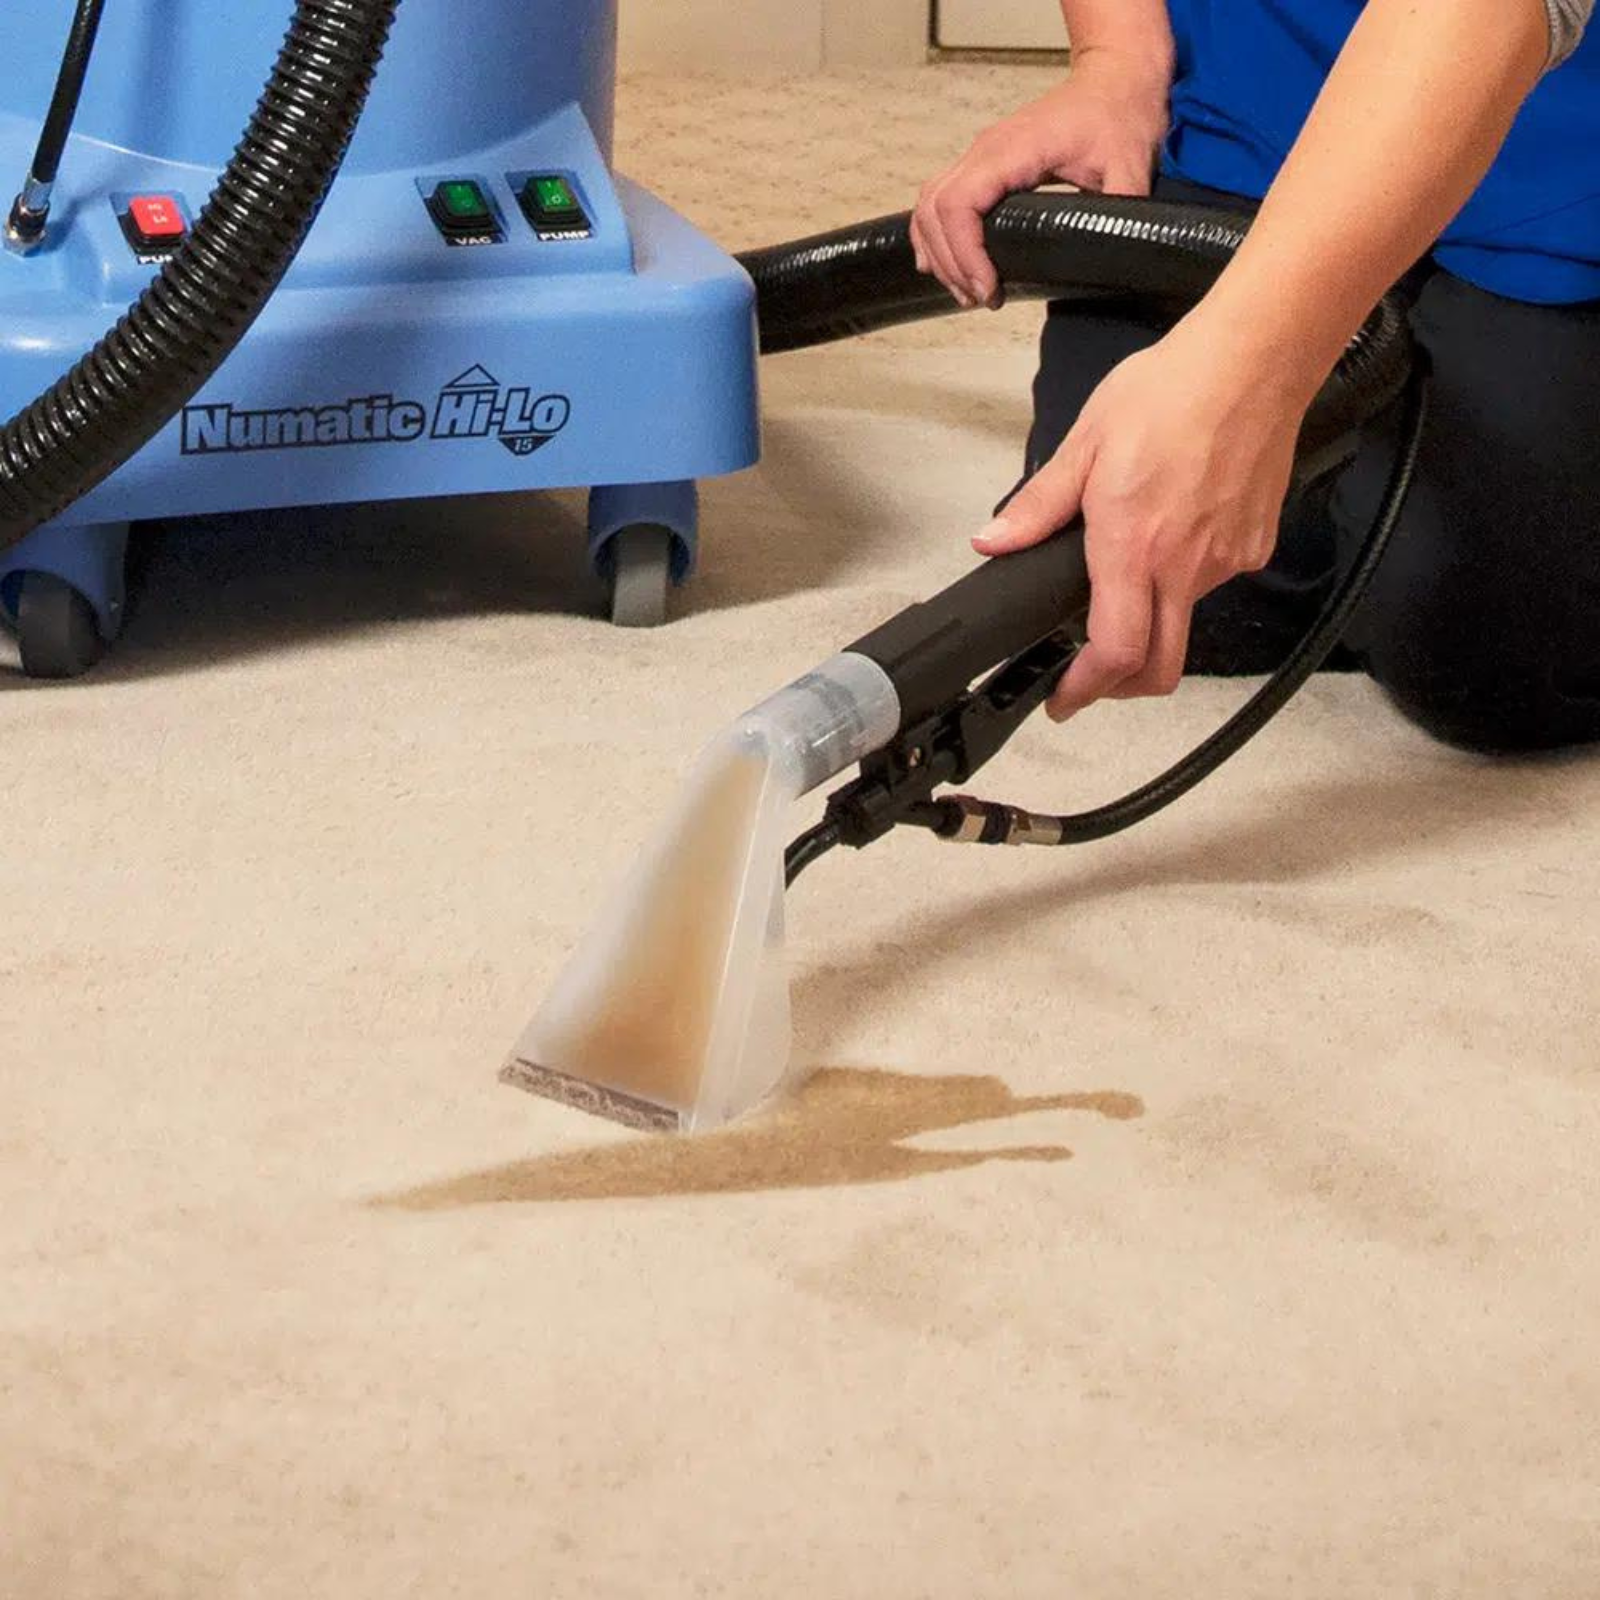 Numatic Cleantec Hi-Lo 15 Extraction Carpet Cleaner